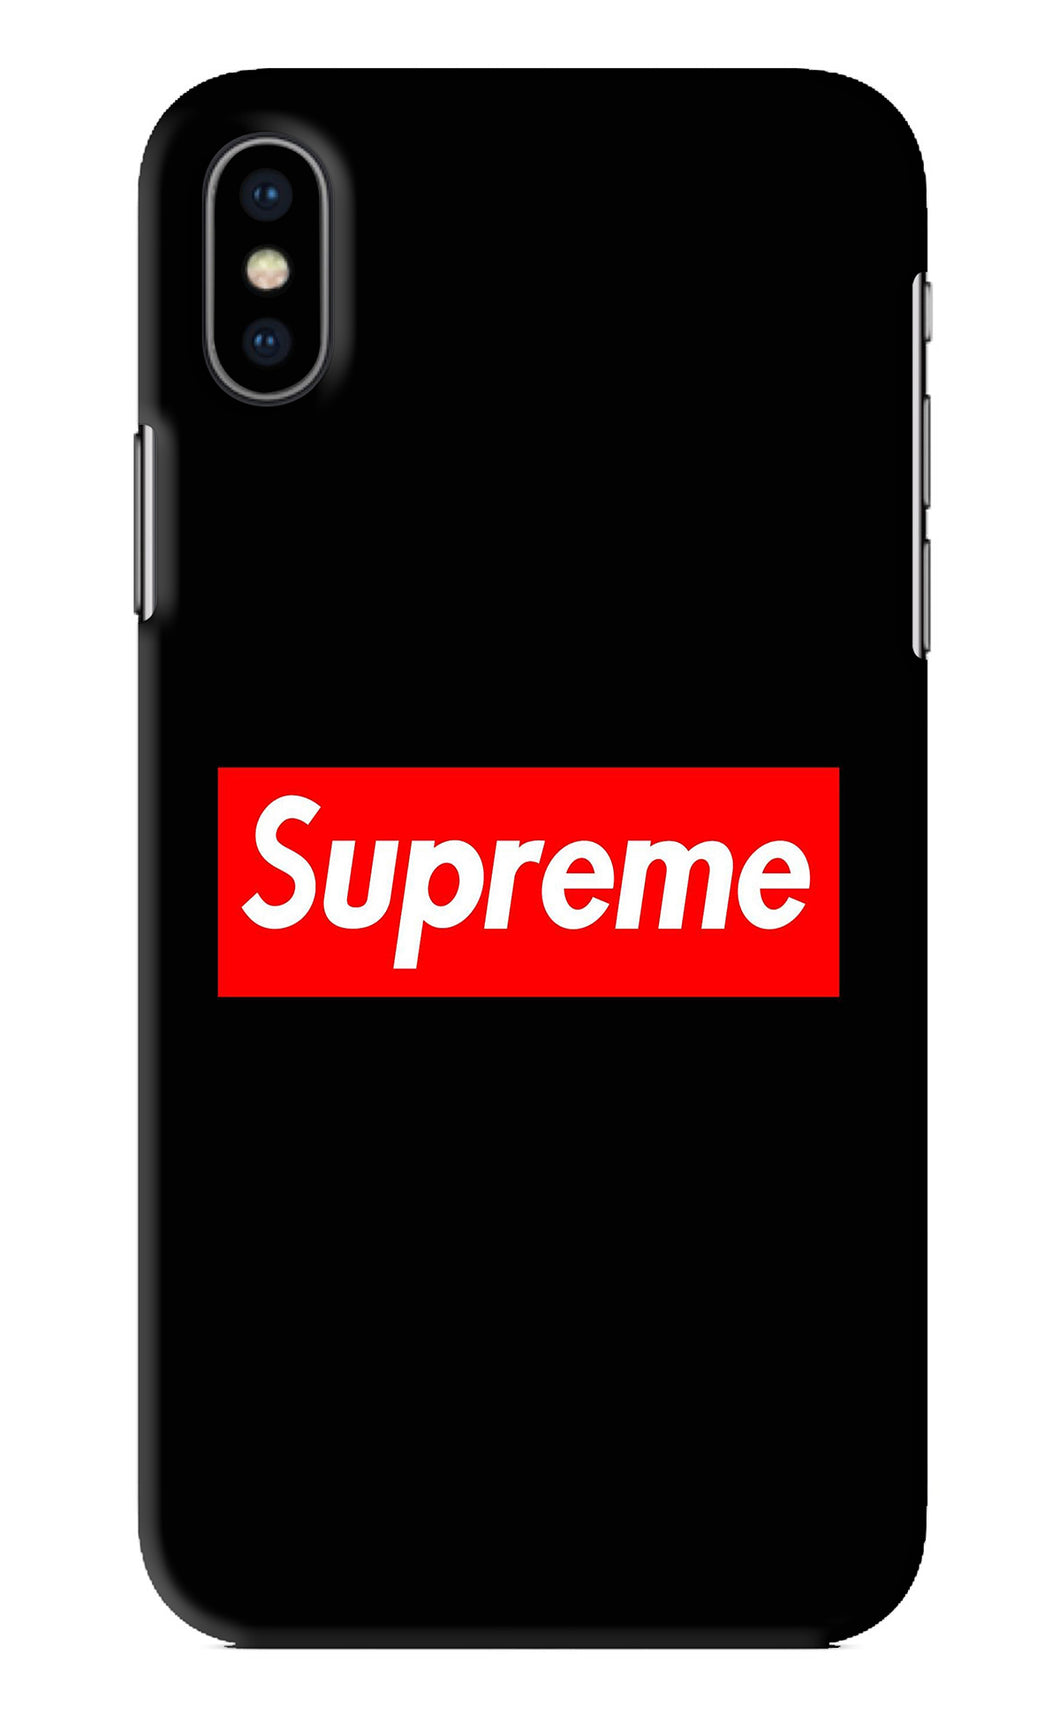 Supreme iPhone XS Back Skin Wrap